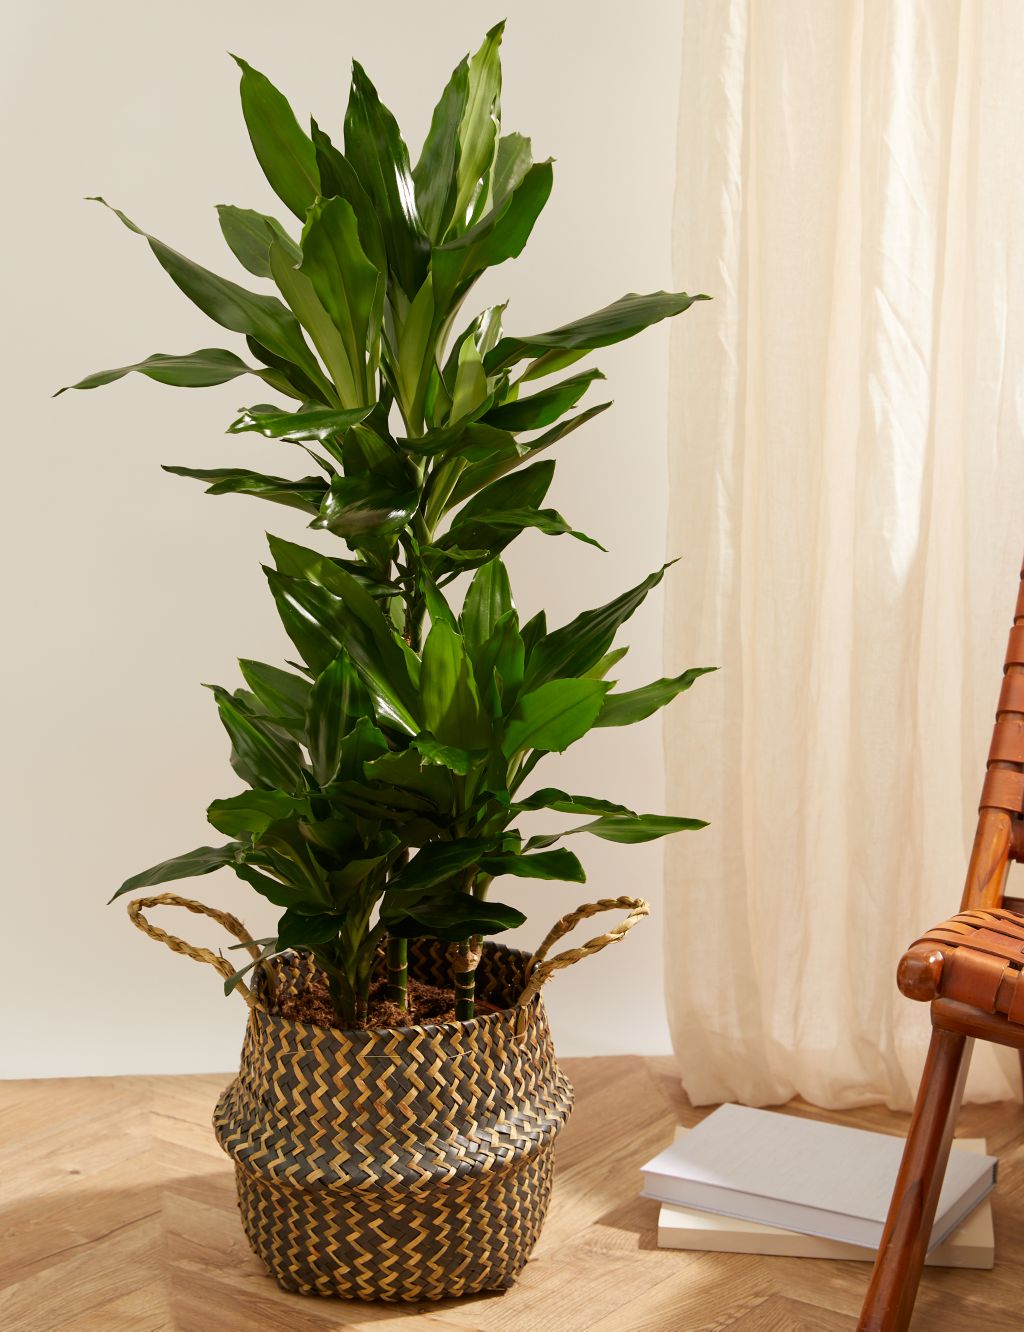 Extra Large Dracaena Plant with Woven Basket